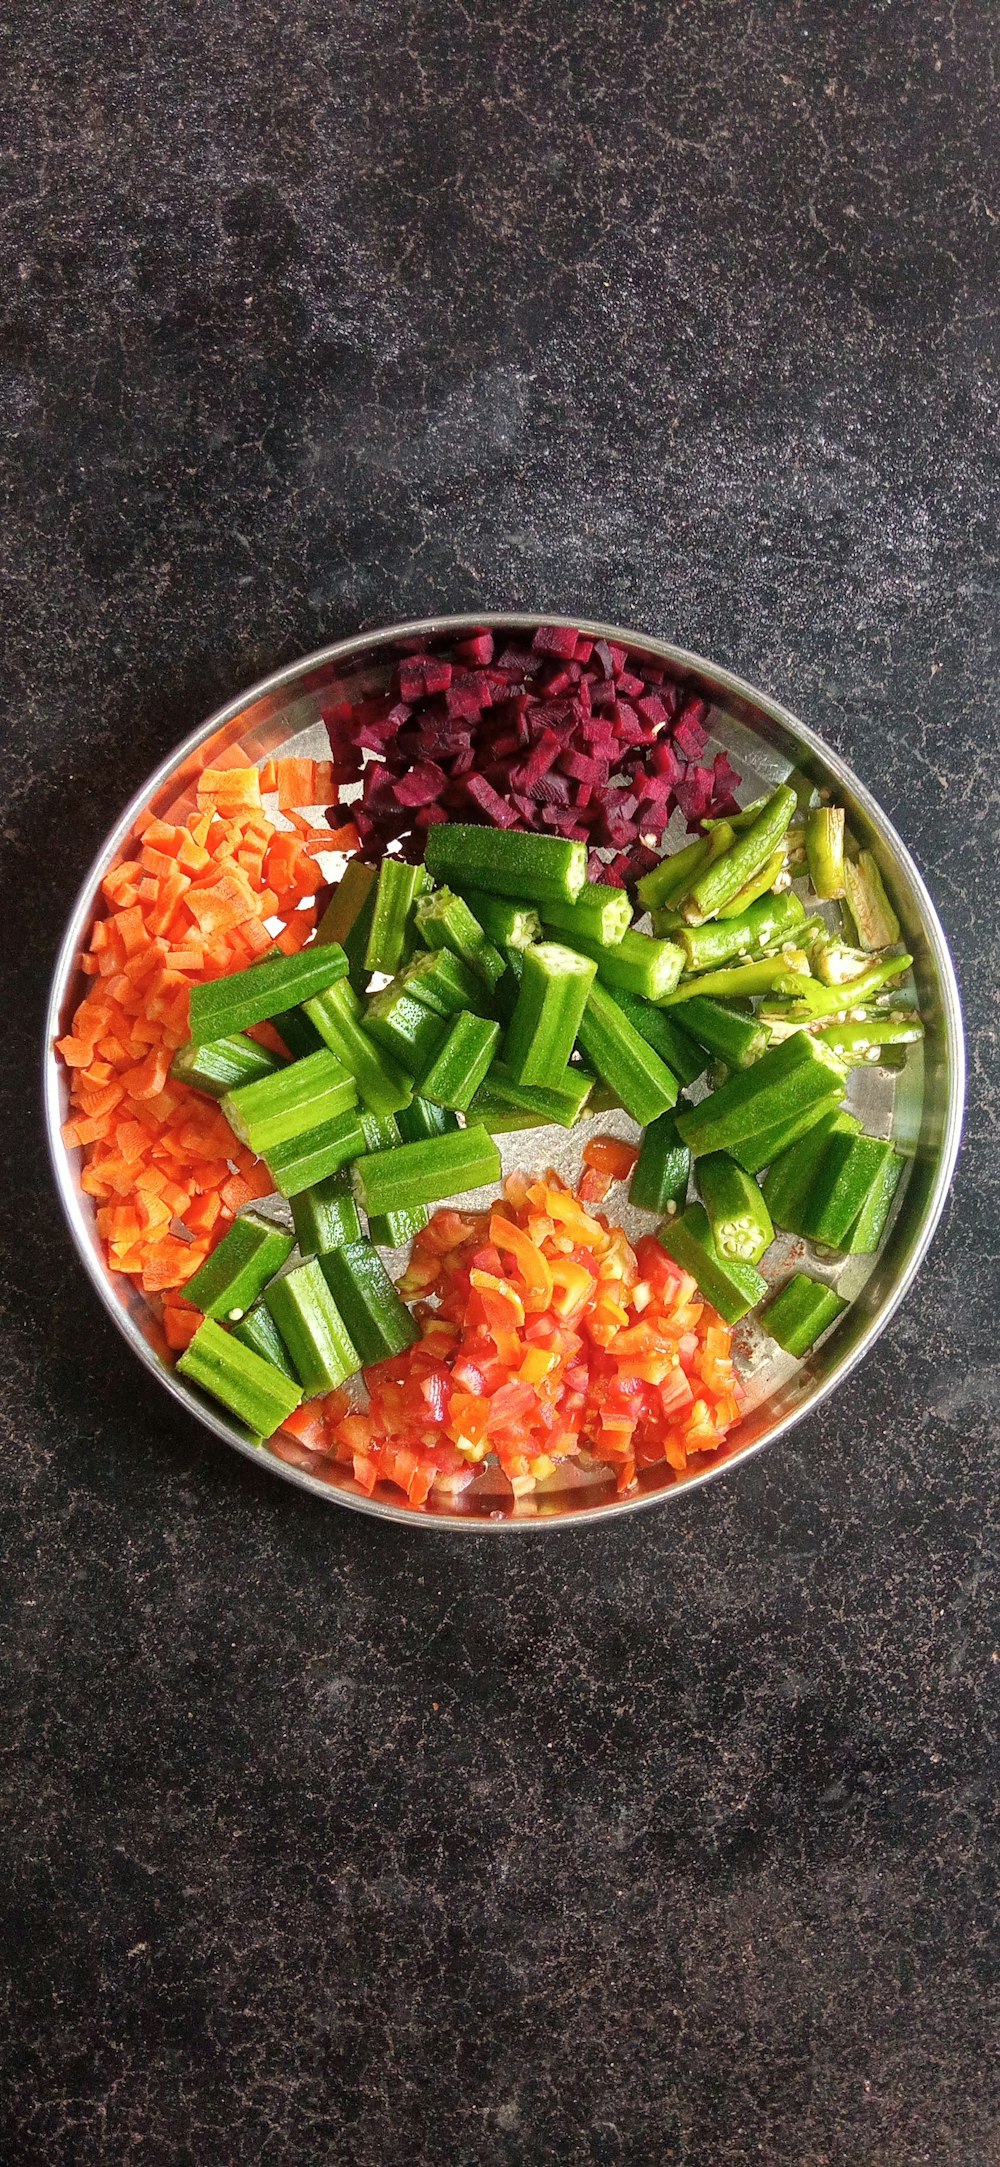 sliced vegetables in stainless steel bowl